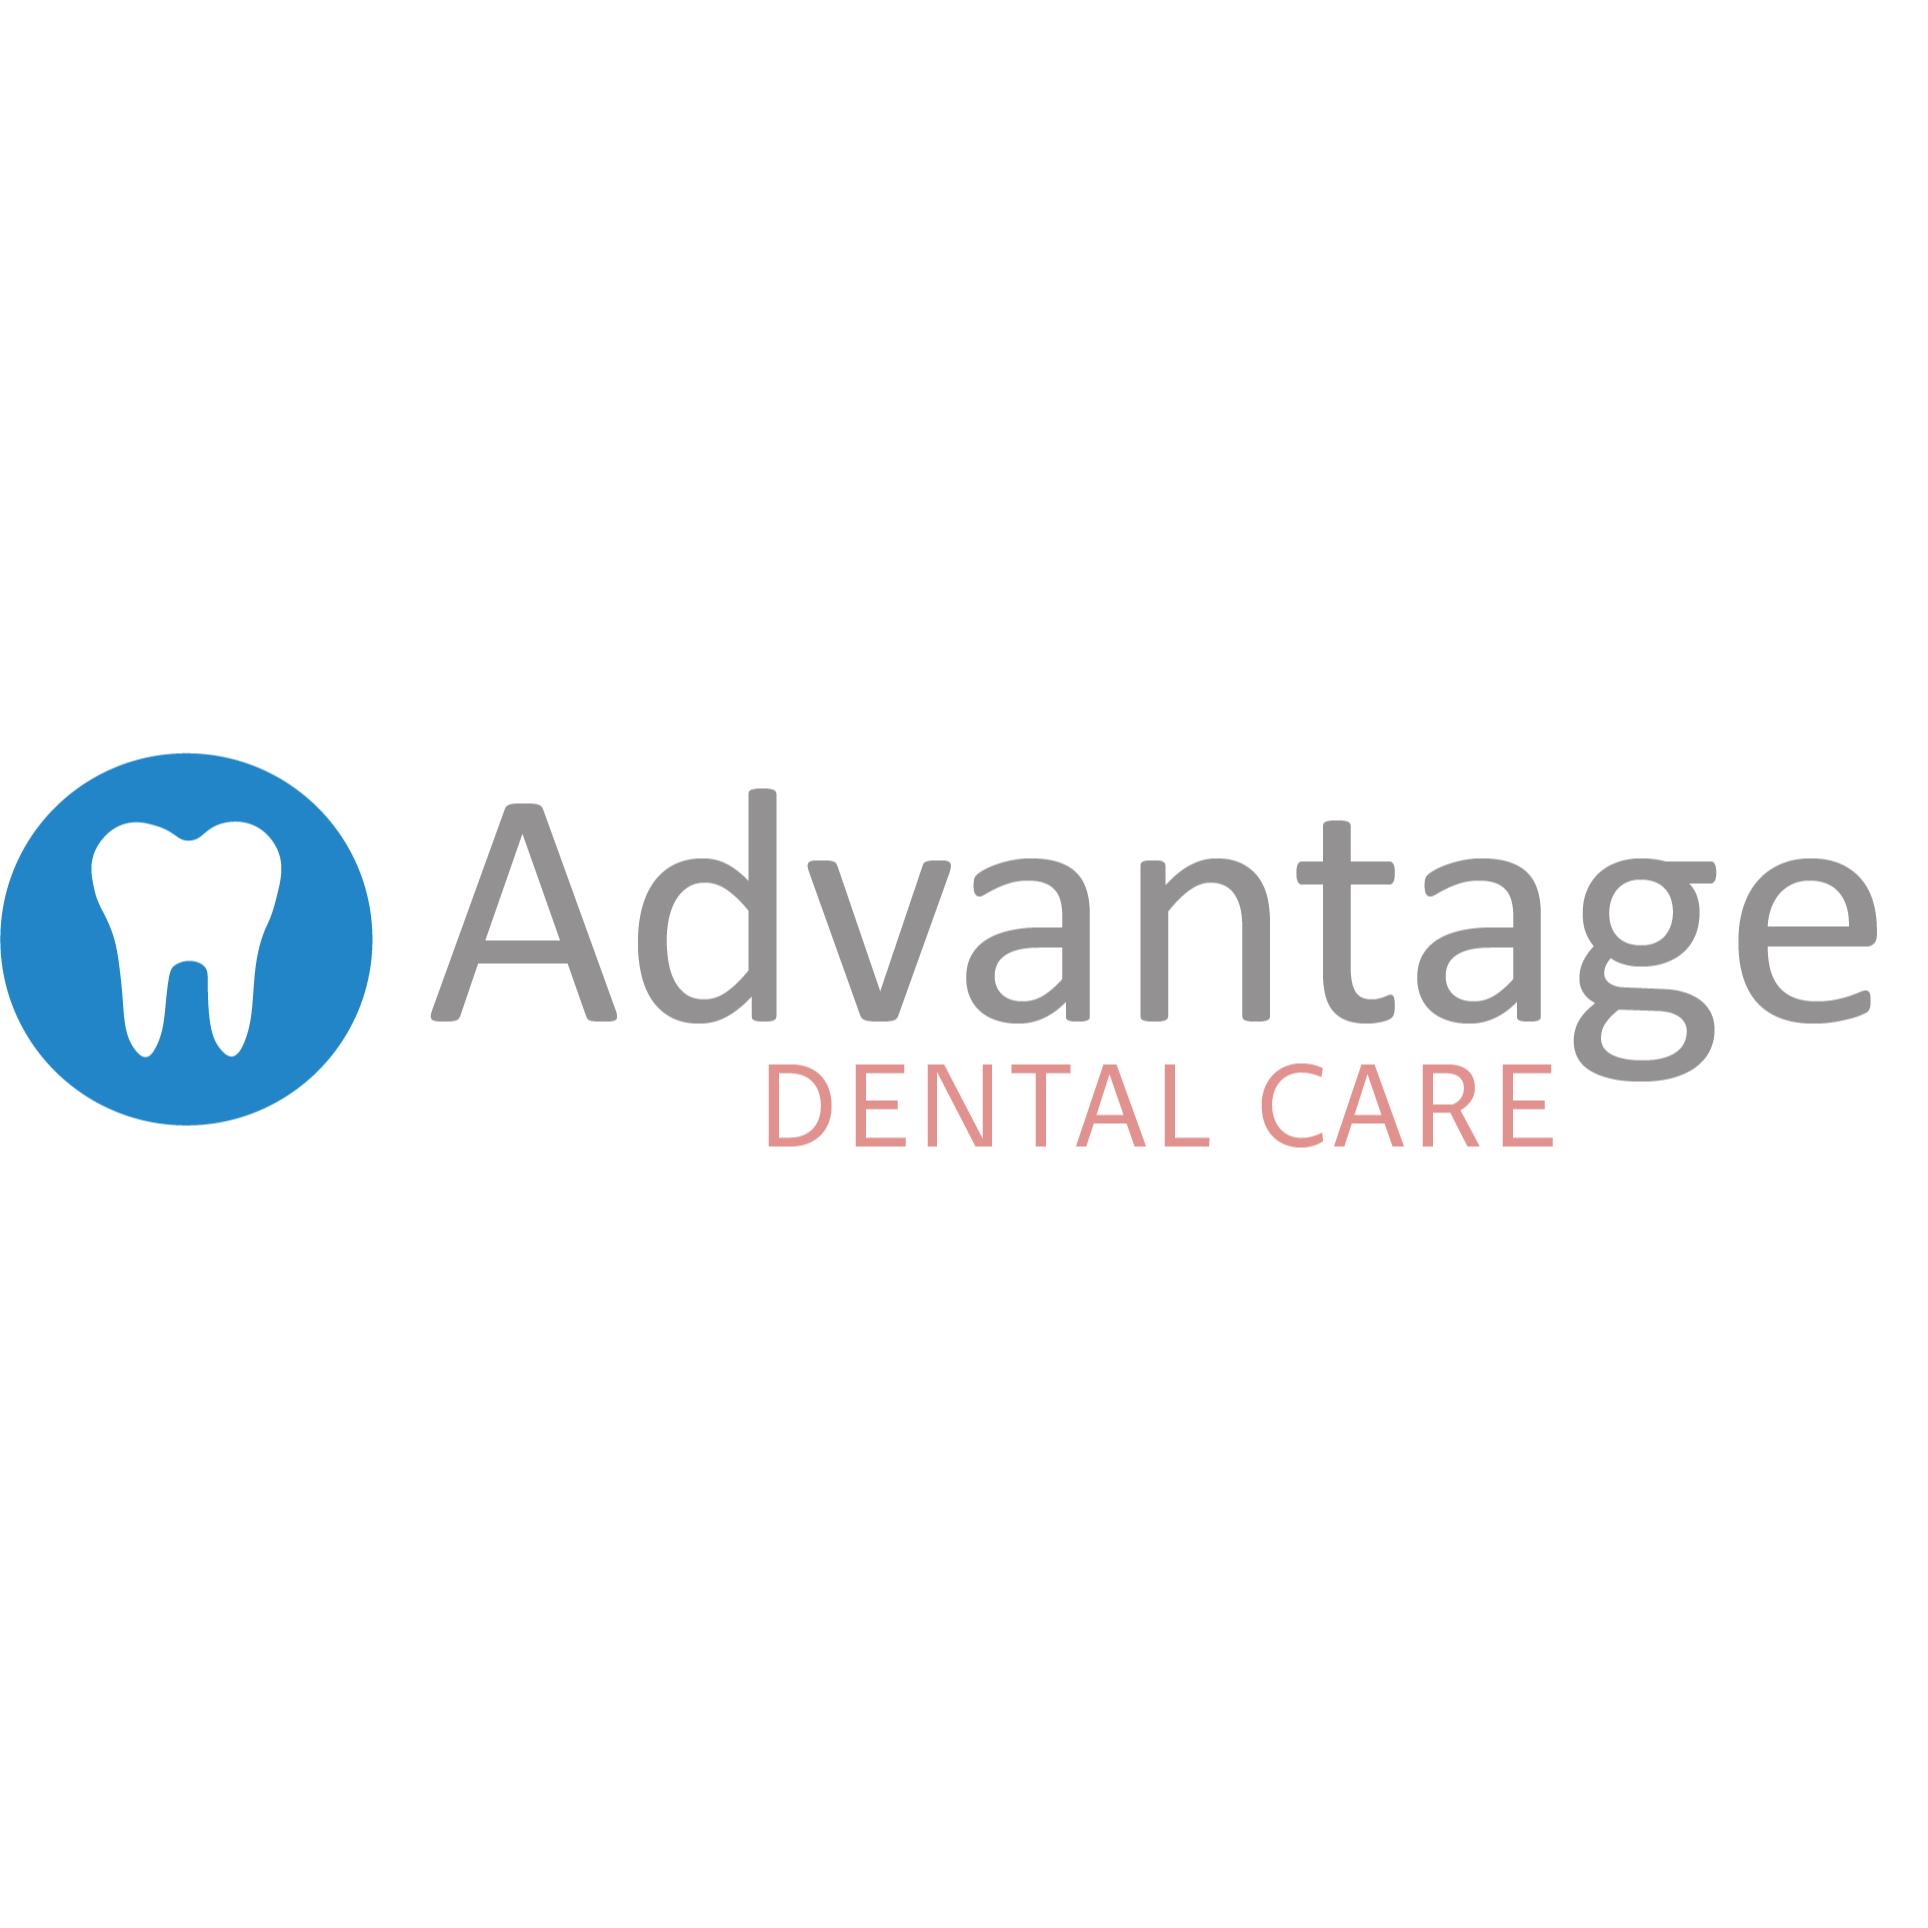 Advantage Dental Care